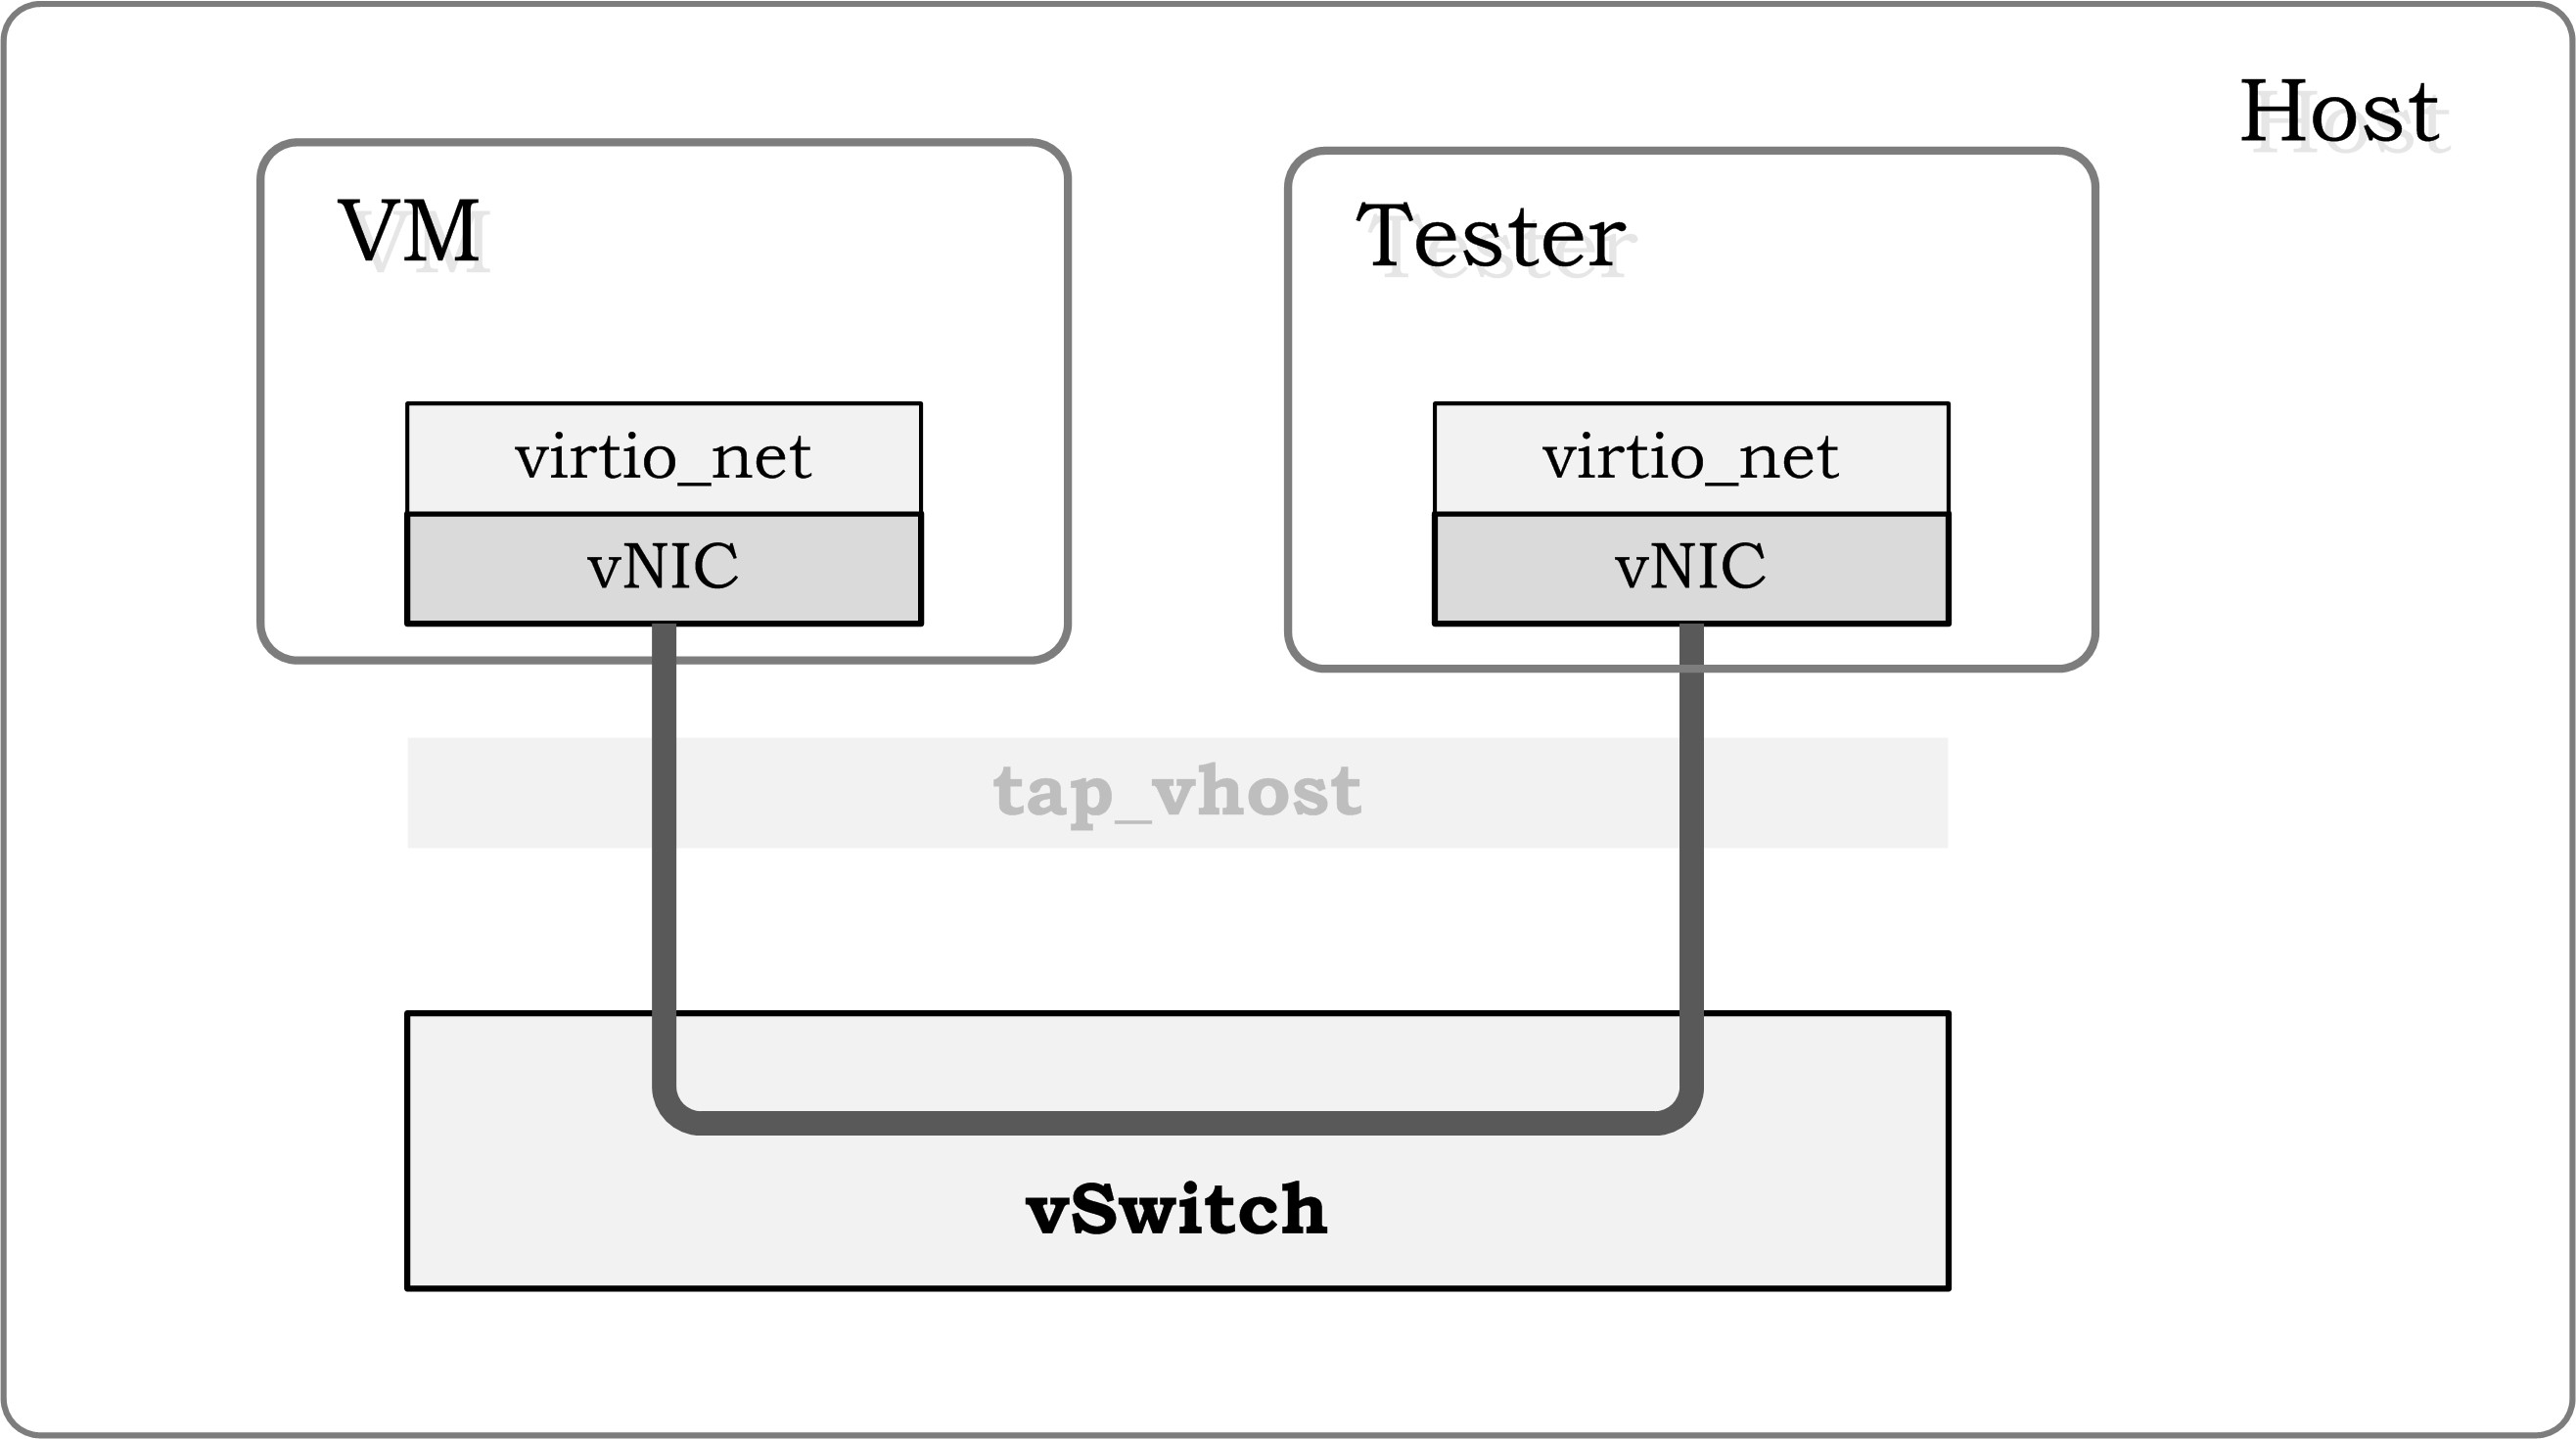 testsuites/vstf/vstf_scripts/vstf/controller/res/deployment/Tu.jpg